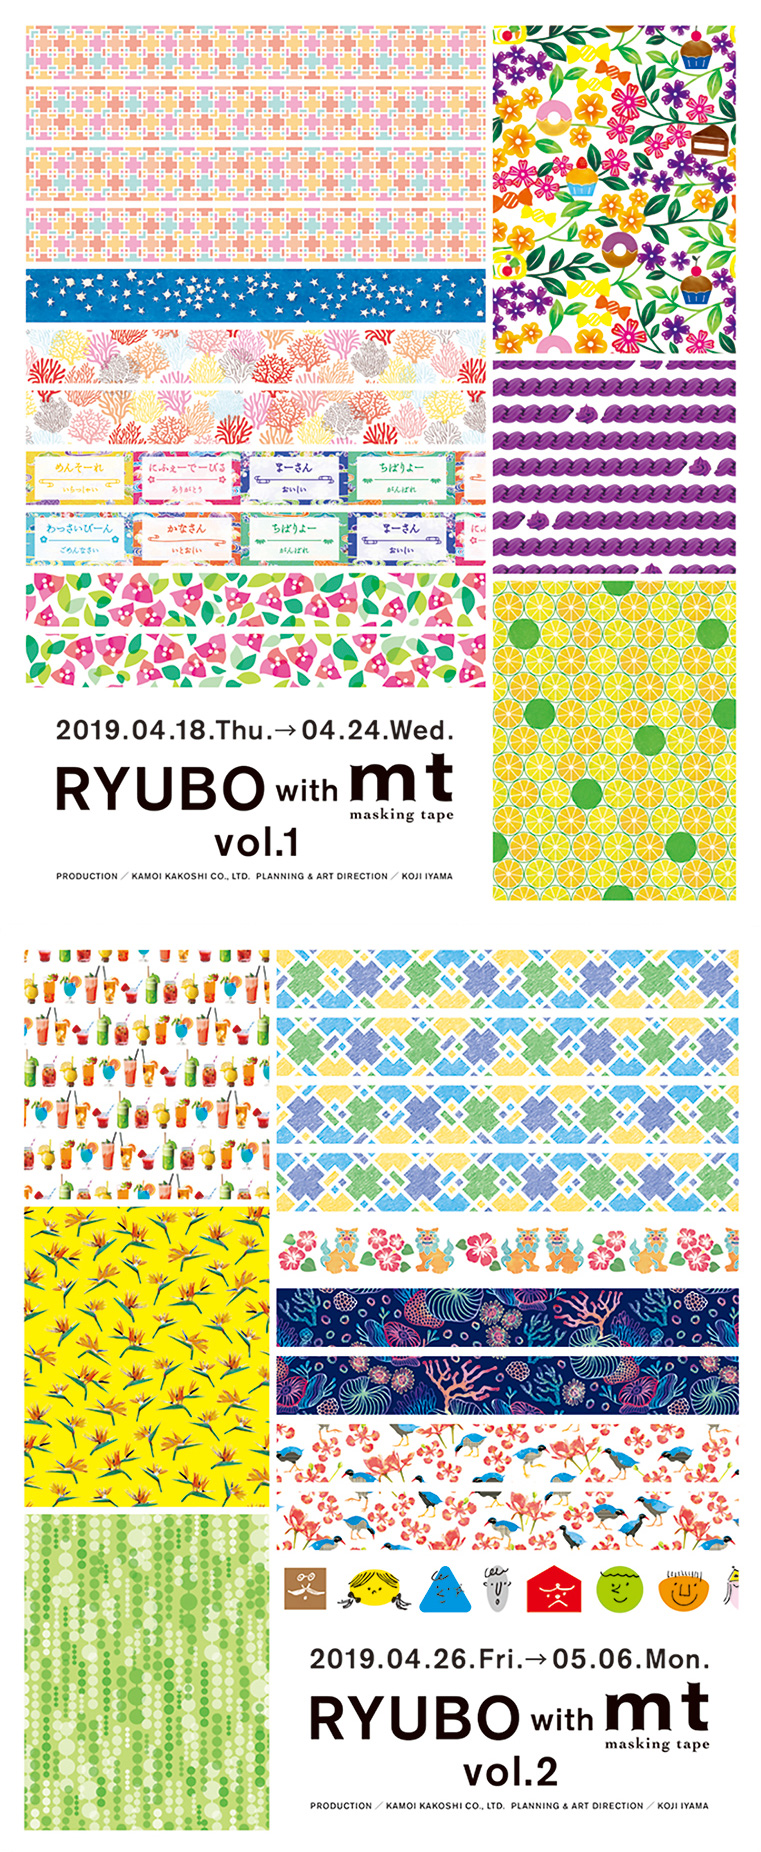 RYUBO with mt masking tape vol1・vol2 開催